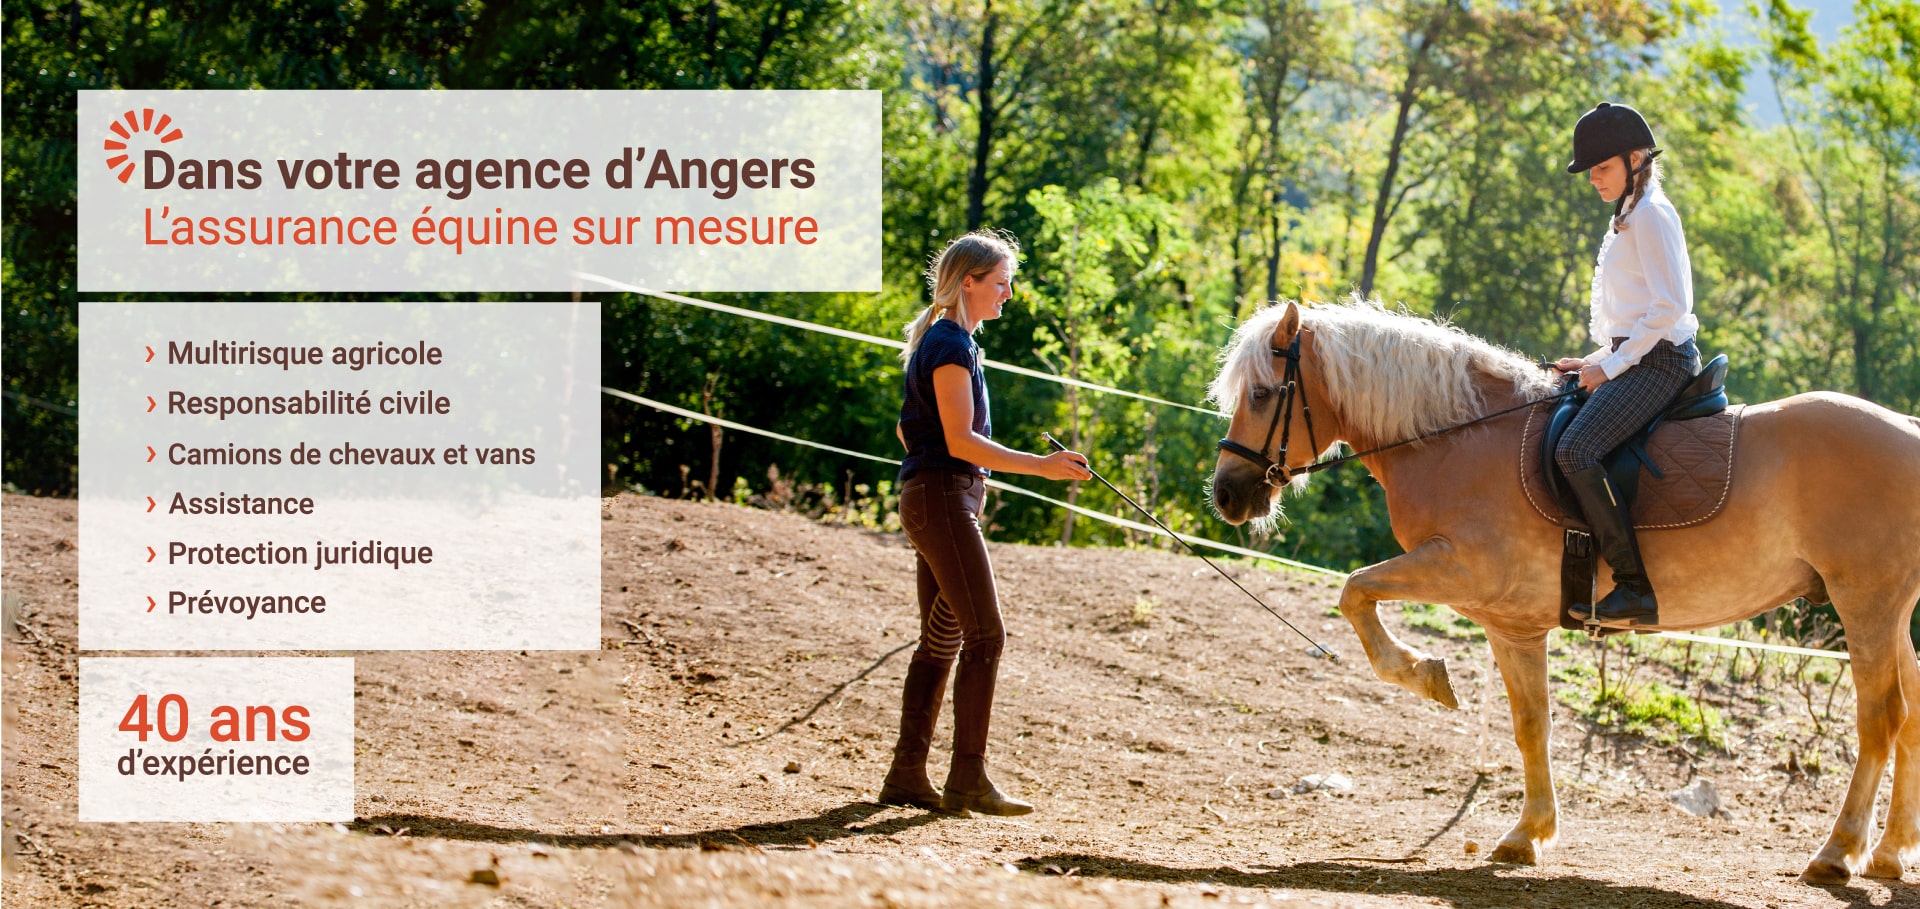 assurance-equine-angers-thelem-assurance